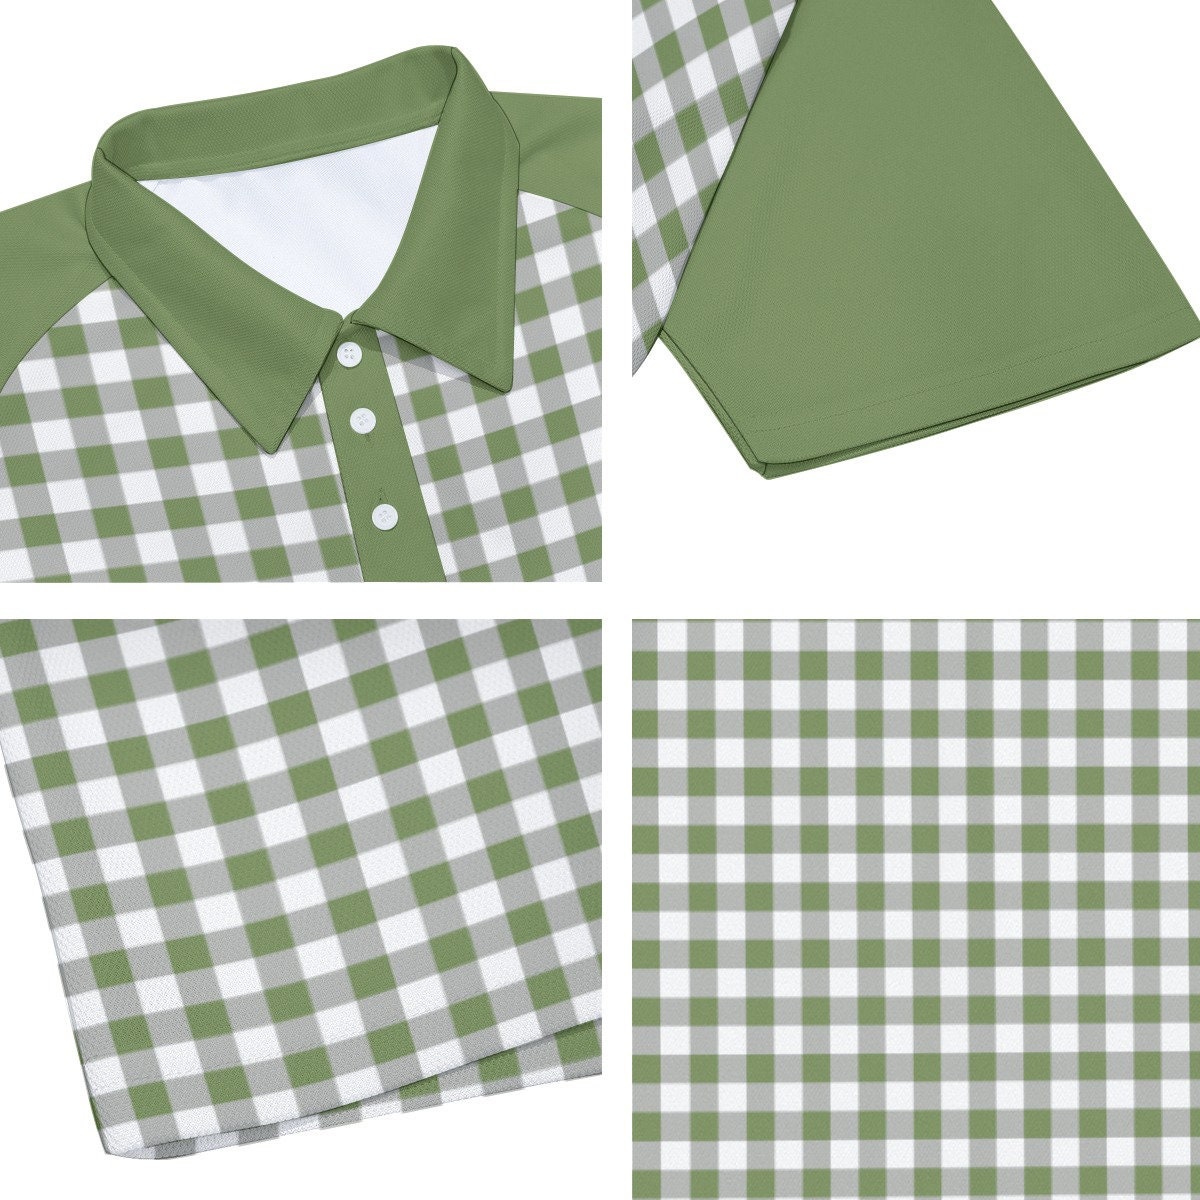 Polo Shirt, Green Polo Shirt, Men's vintage shirt, Vintage style shirt men, Men's Retro shirt, 60s Mens top,Green Gingham Shirt, Men's shirt